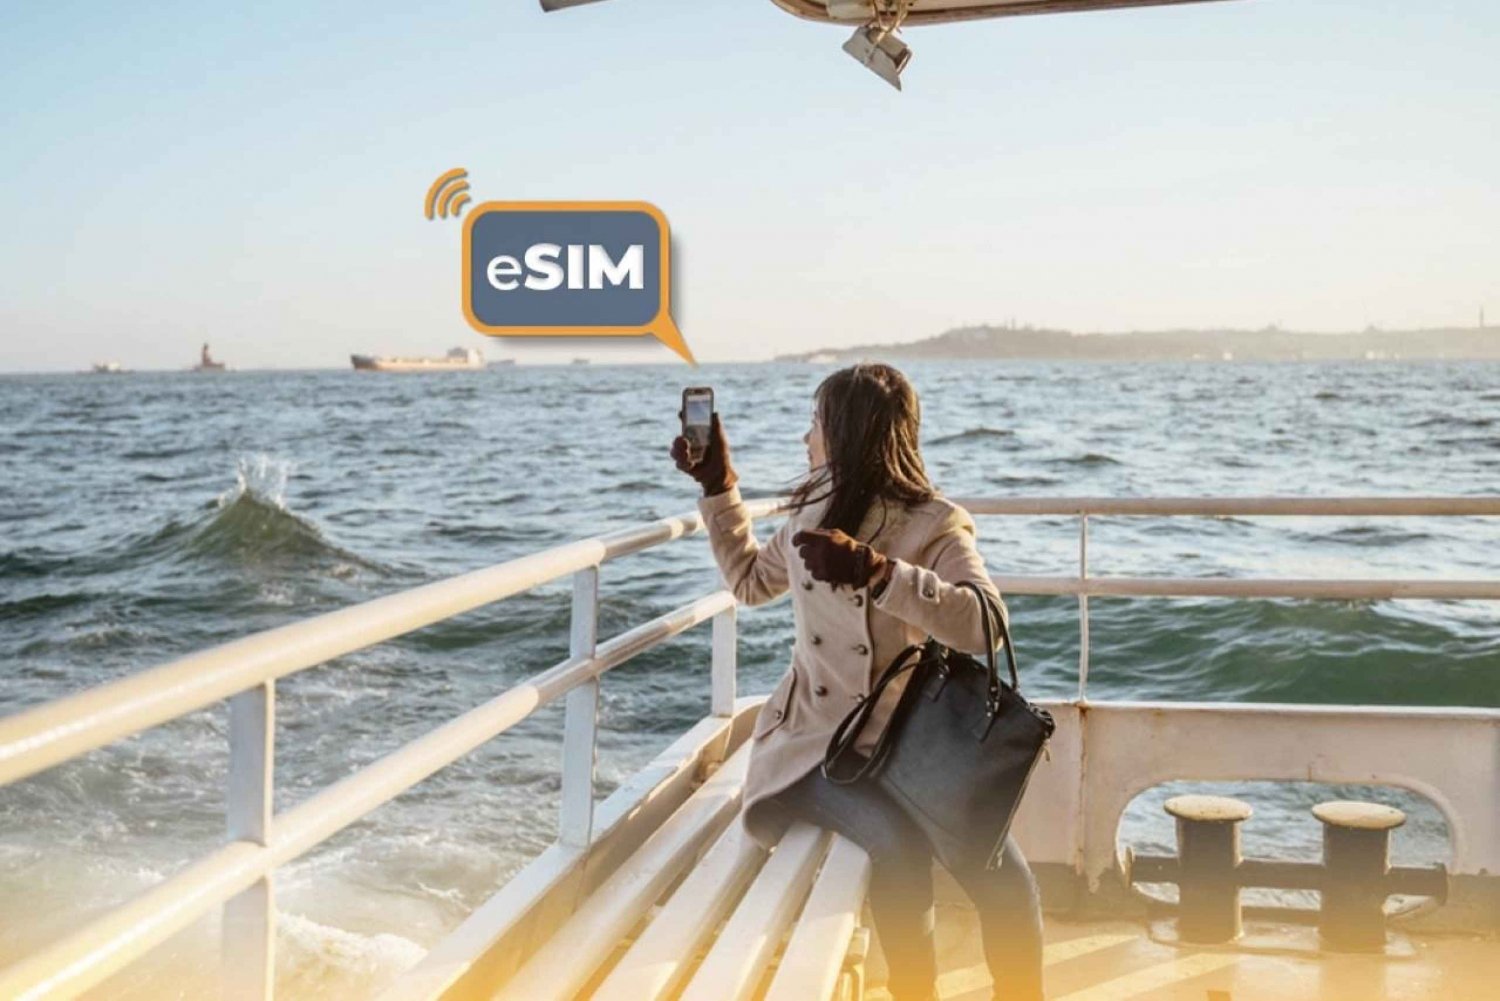 Ölüdeniz / Turkey: Roaming Internet with eSIM Mobile Data